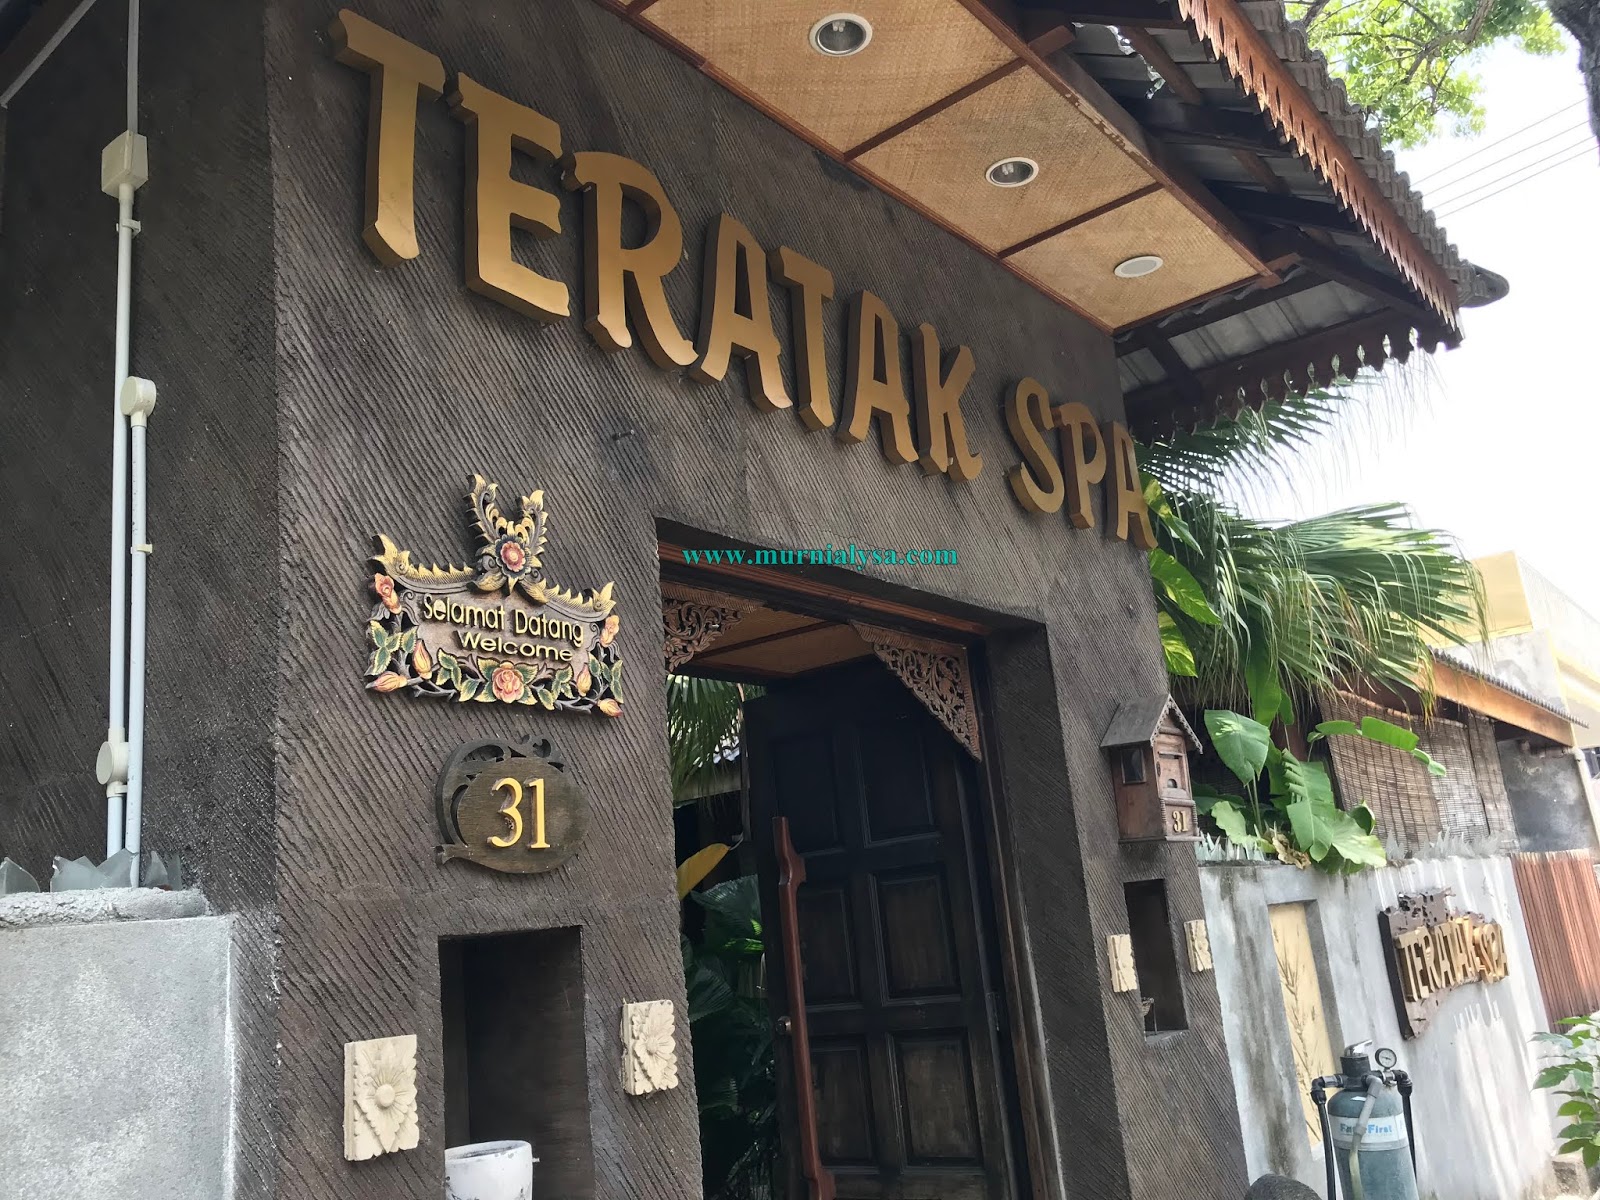 Pengalaman Memanjakan Diri Di Teratak Spa Penang Spa Terbaik Di Pulau Pinang Coretan Murni